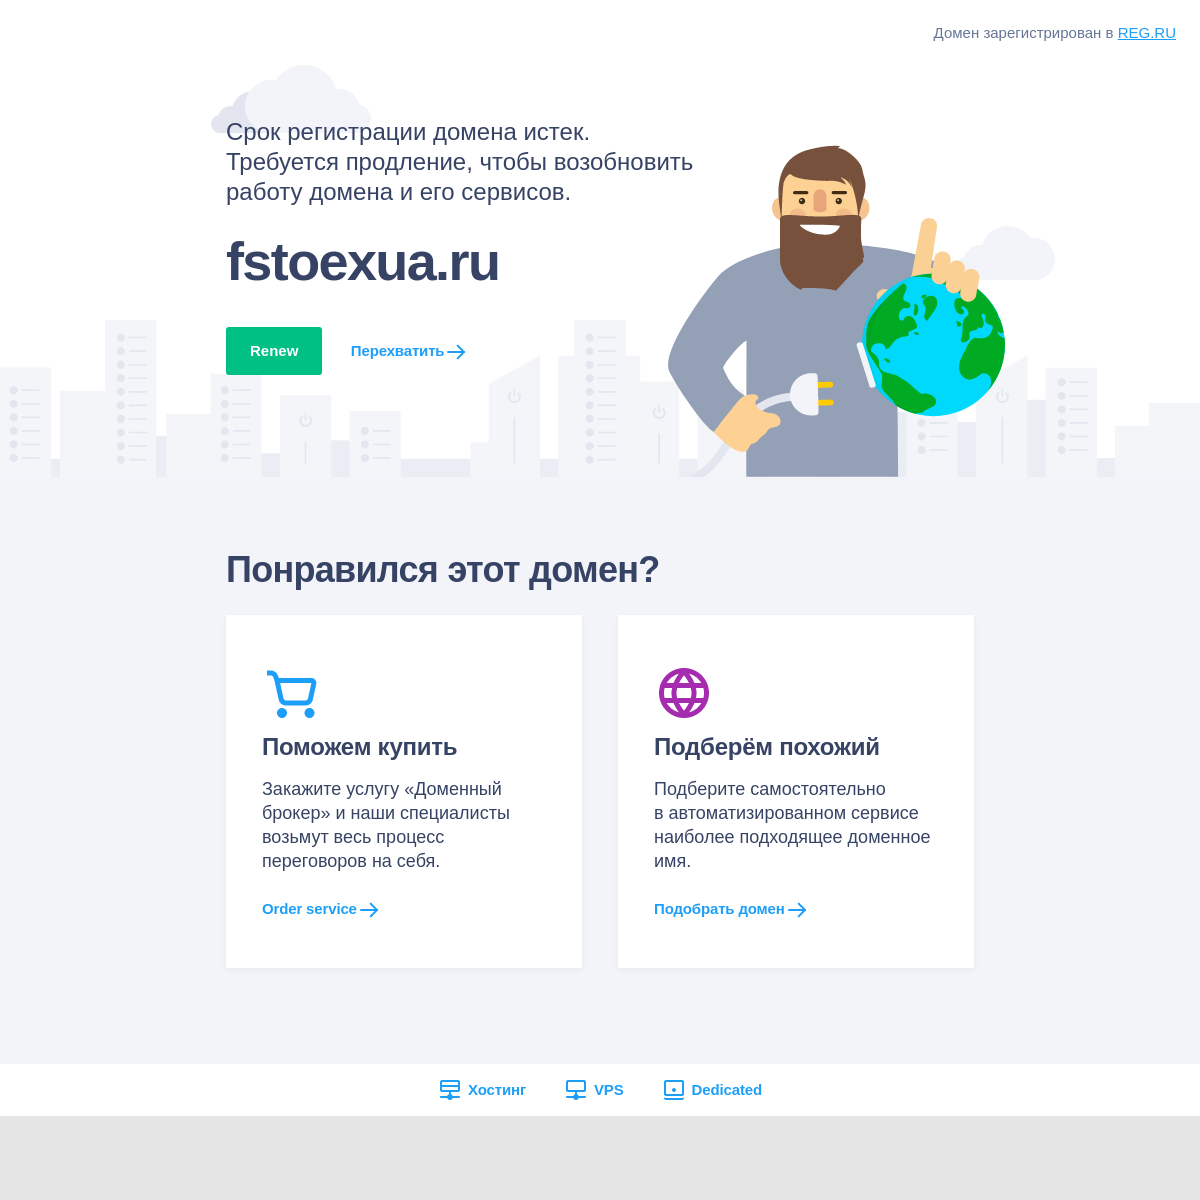 A complete backup of fstoexua.ru